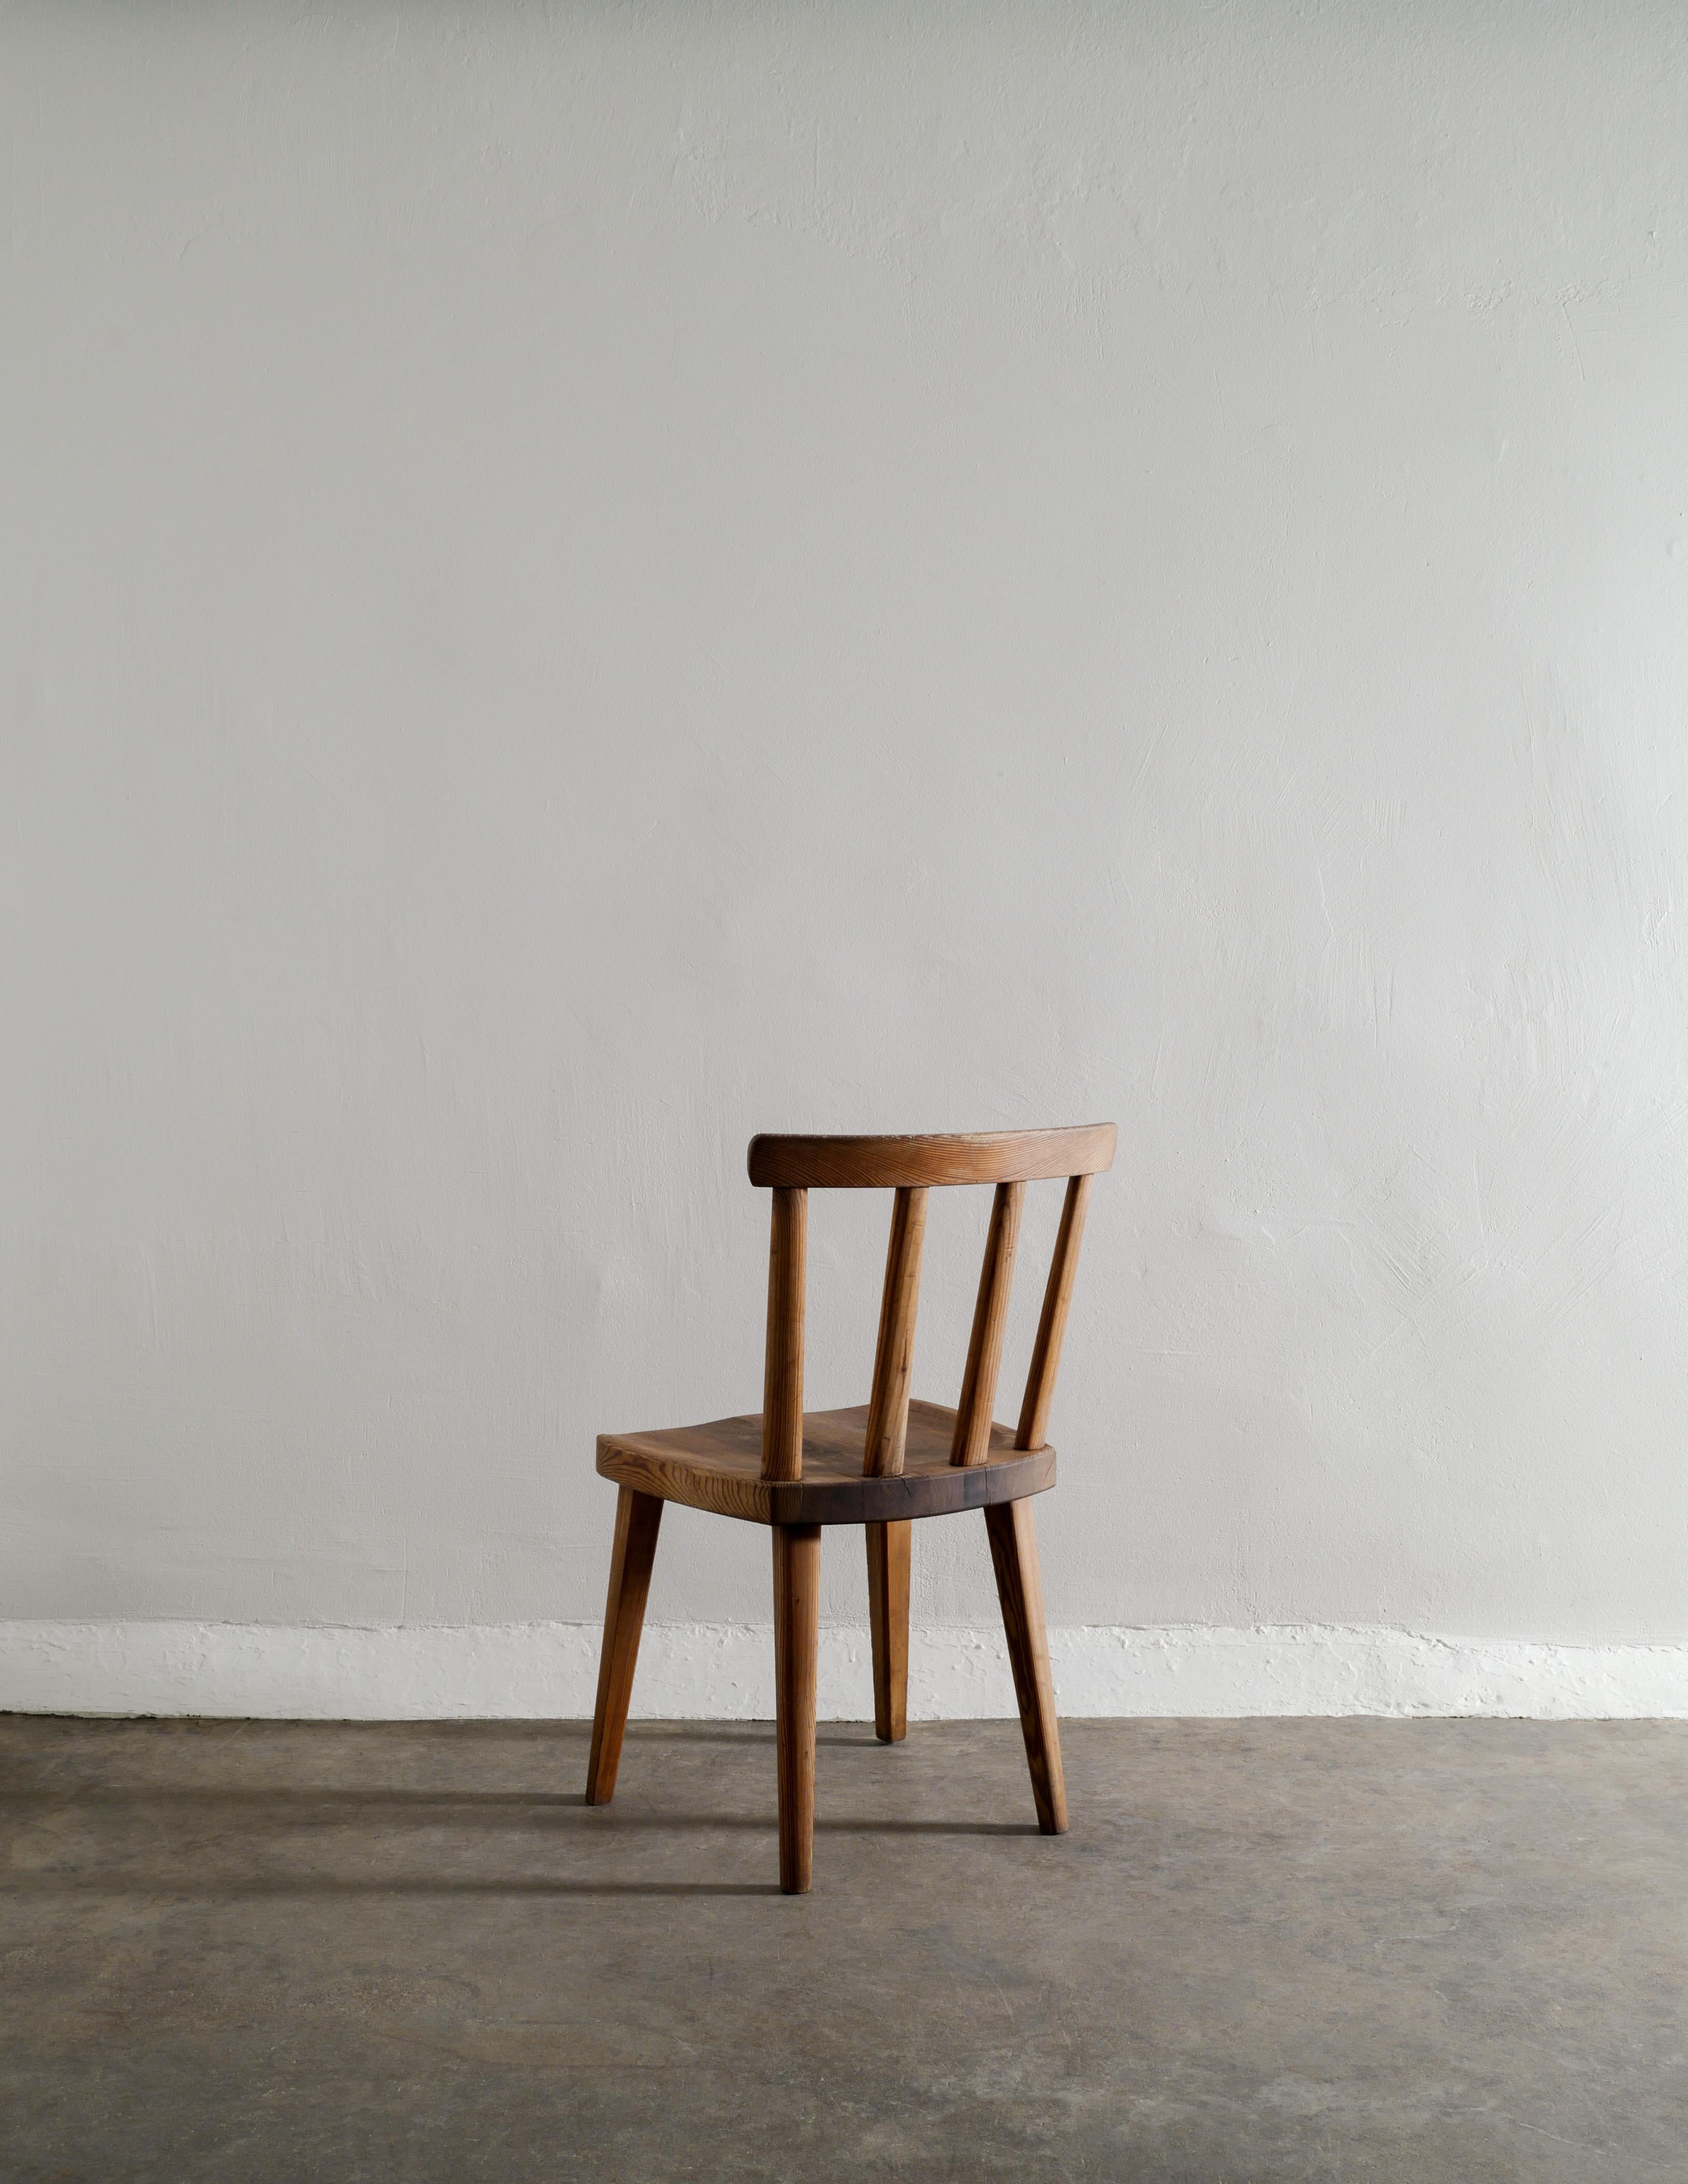 Swedish Axel Einar Hjorth Table & Chair Produced by Nordiska Kompaniet, Sweden, 1930s